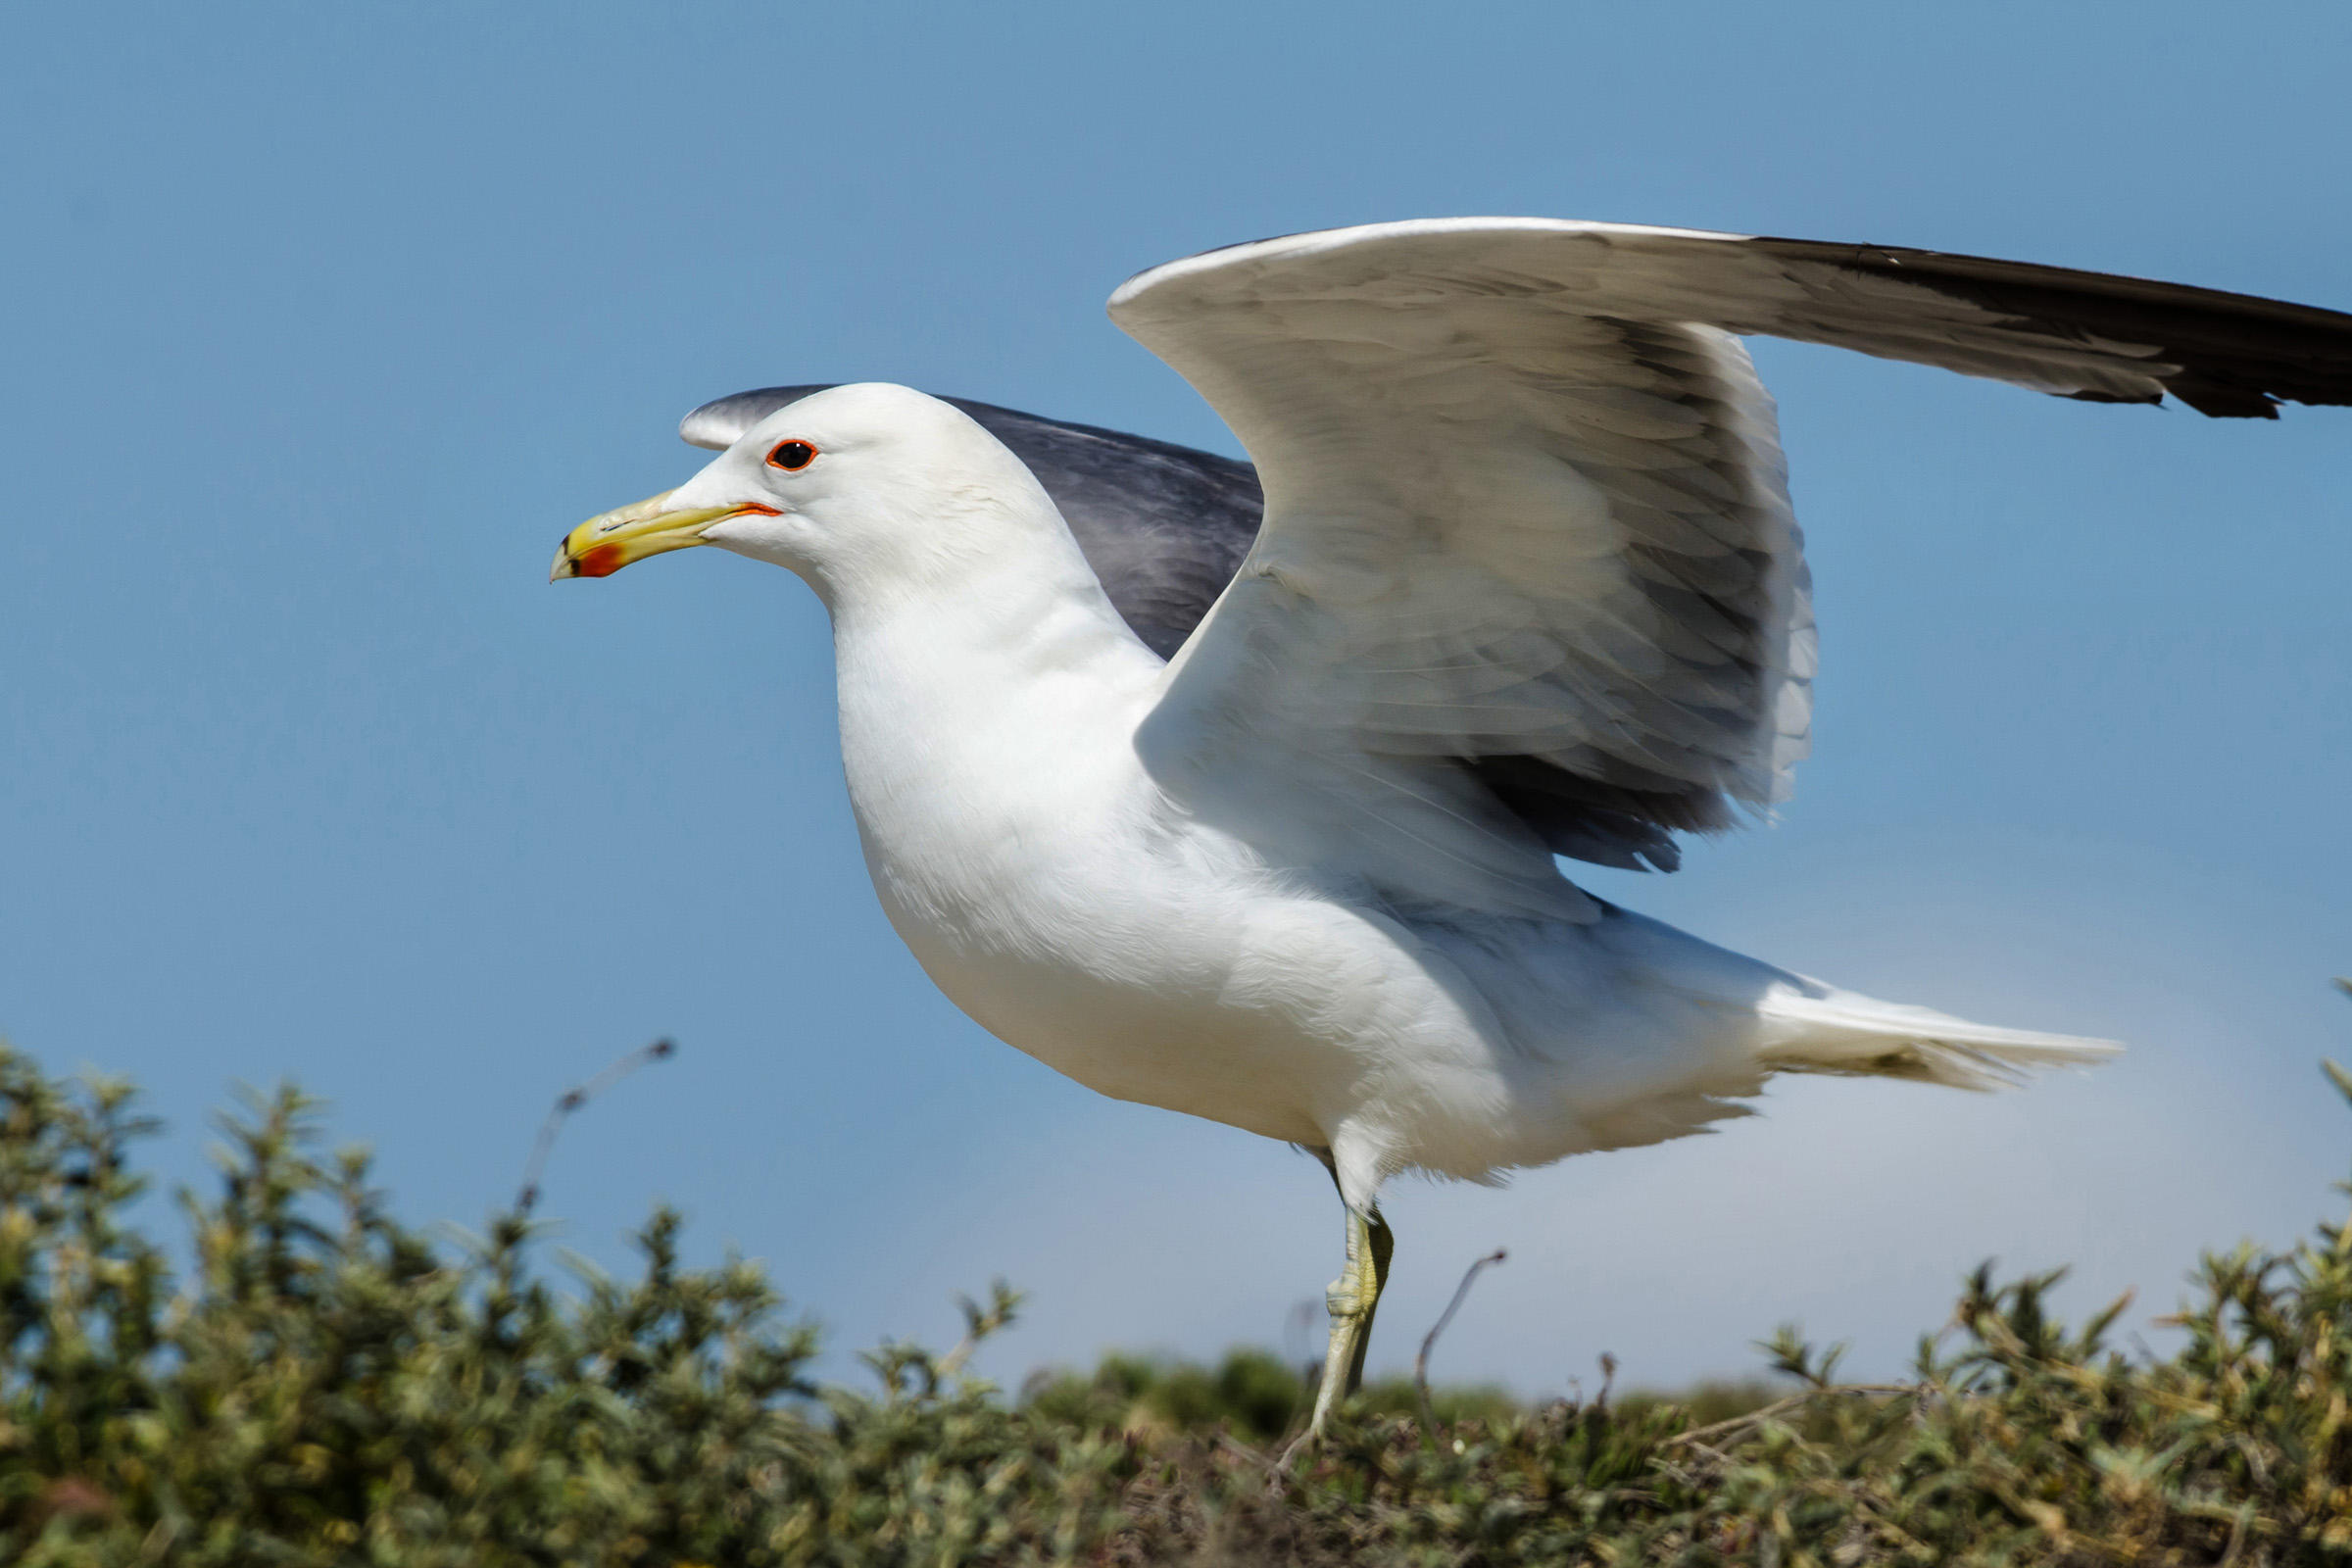 California Gull | Audubon Field Guide